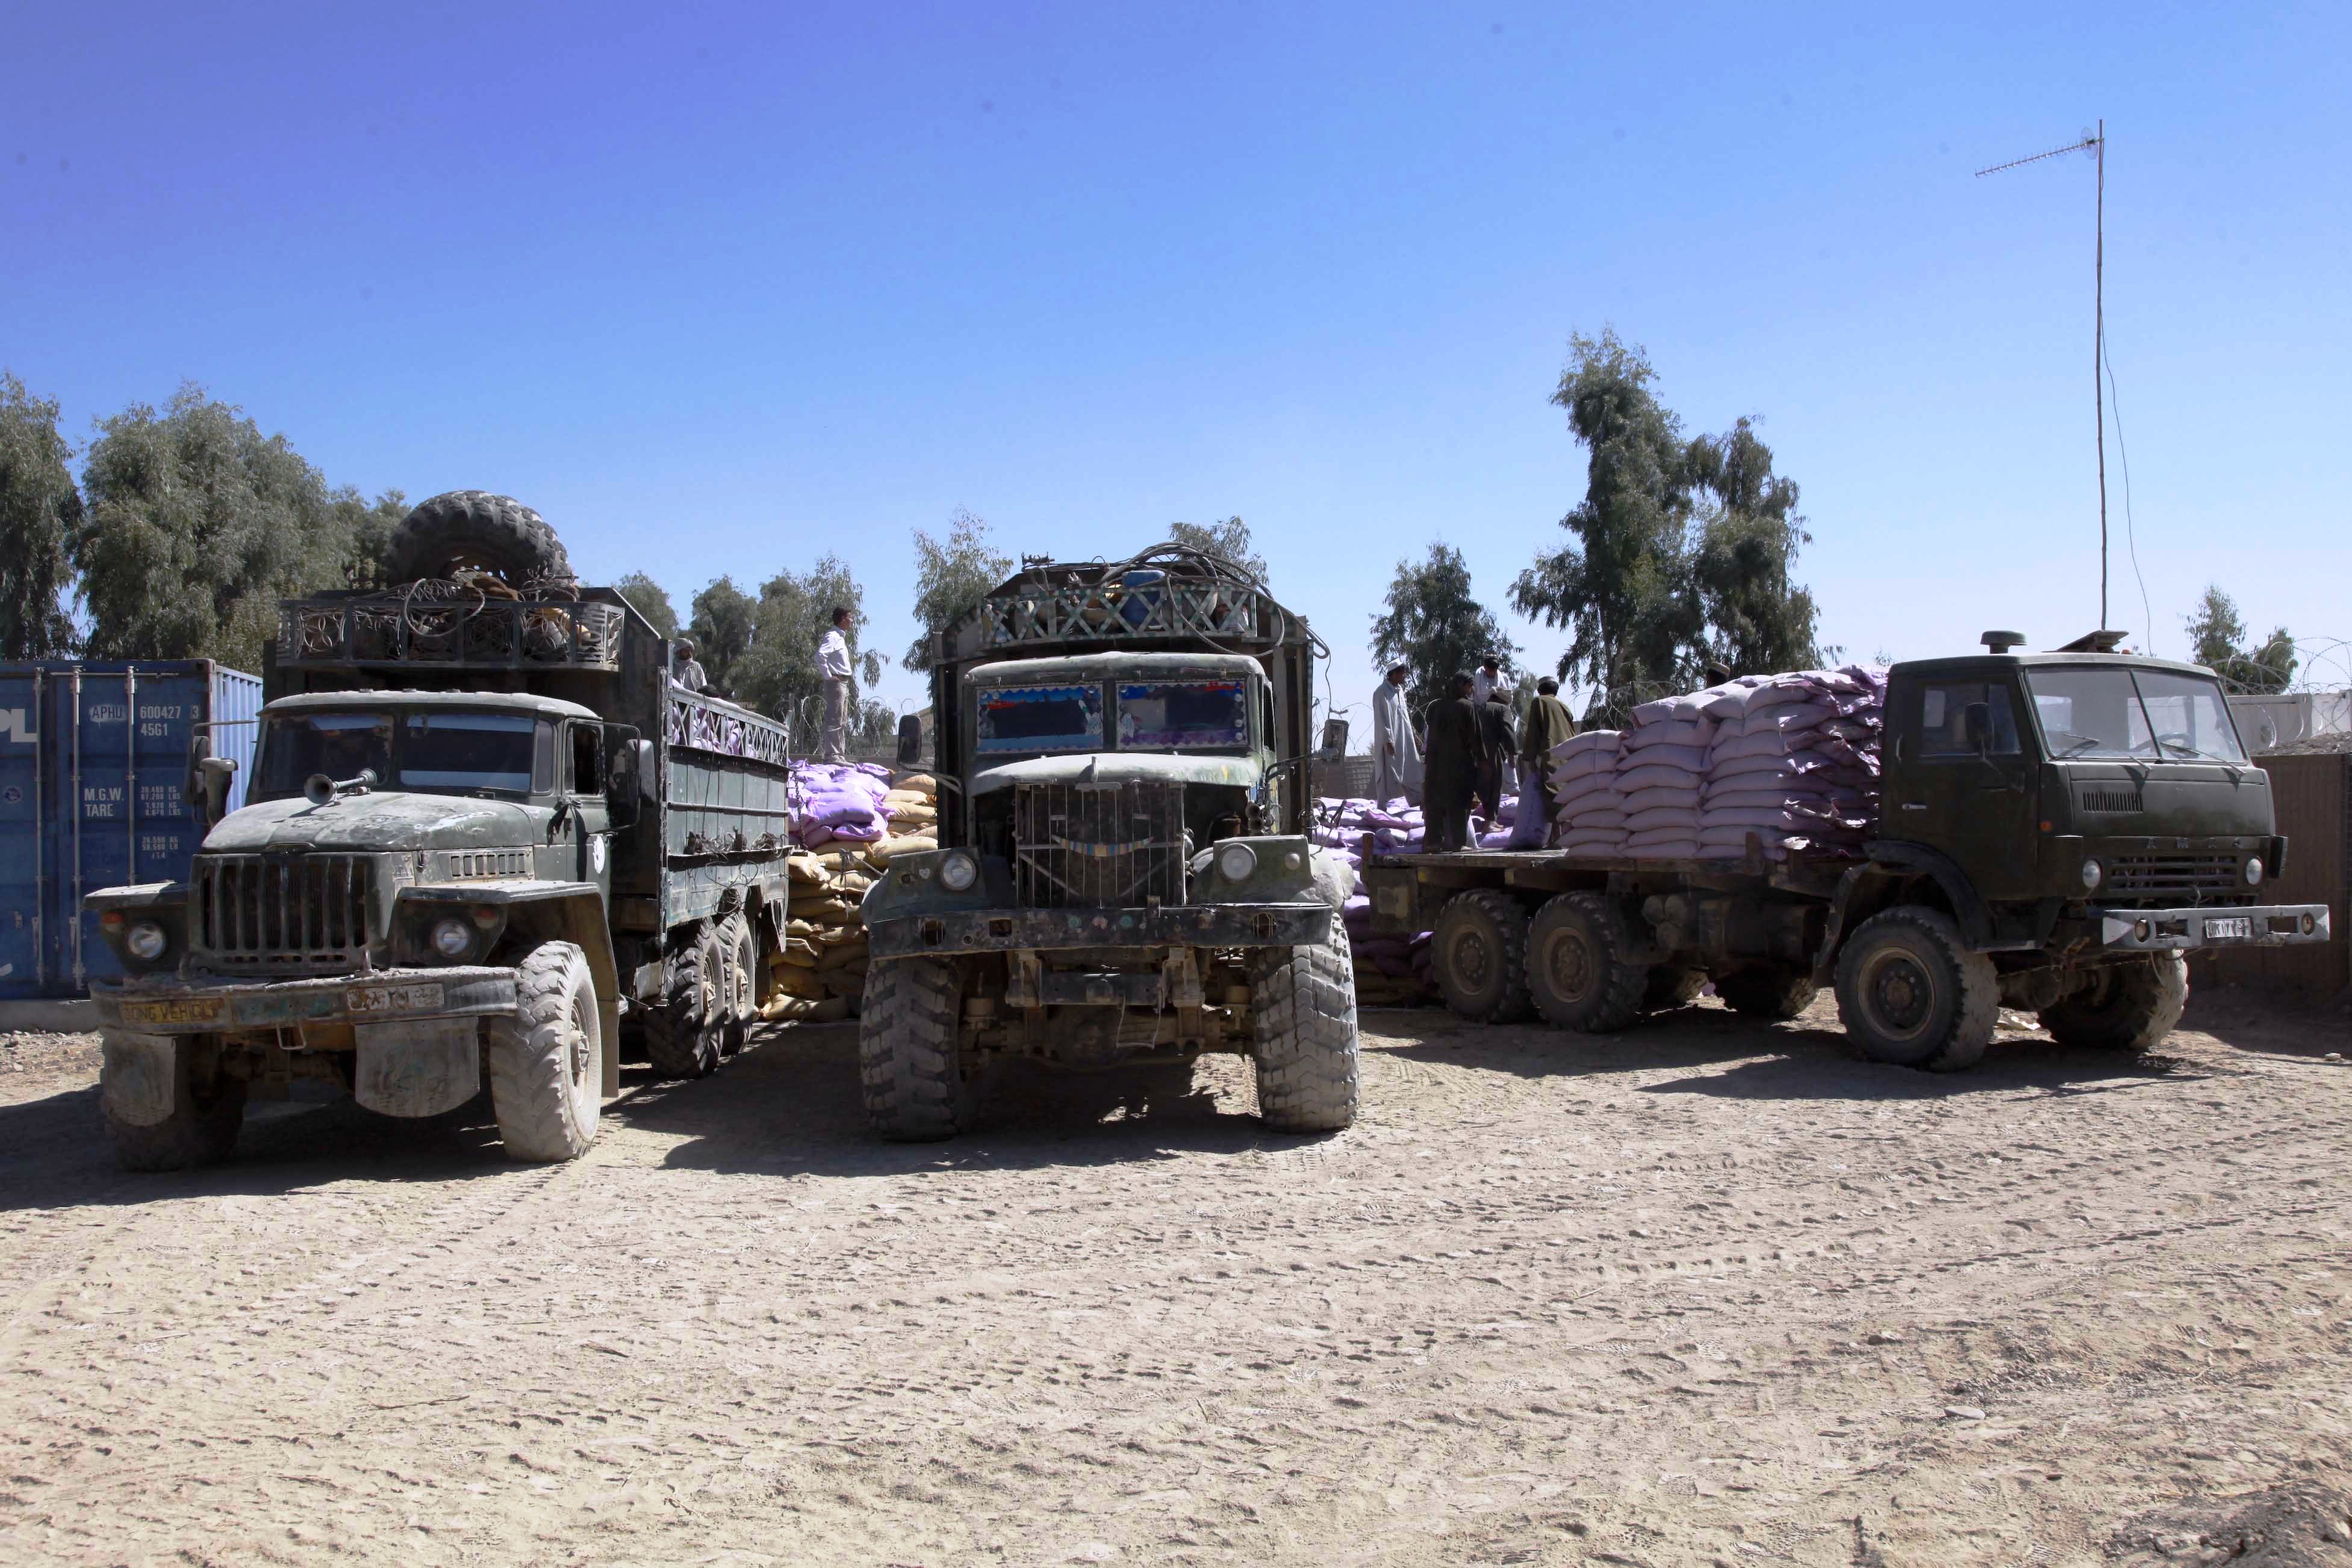 Russian-built trucks in Afghanistan